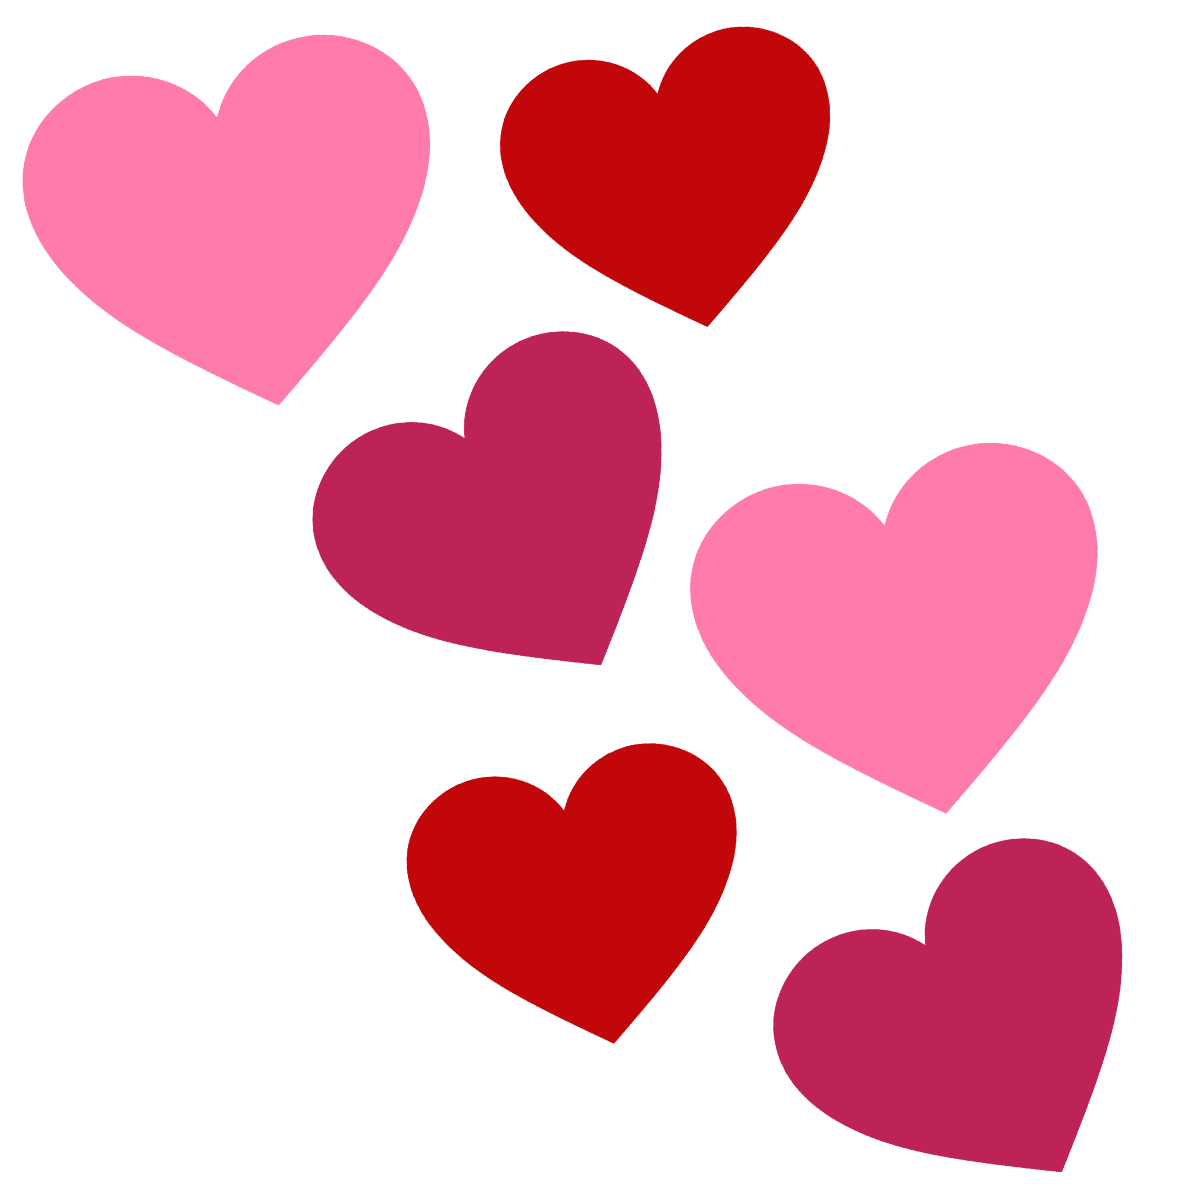 Valentine Heart Clip Art At C